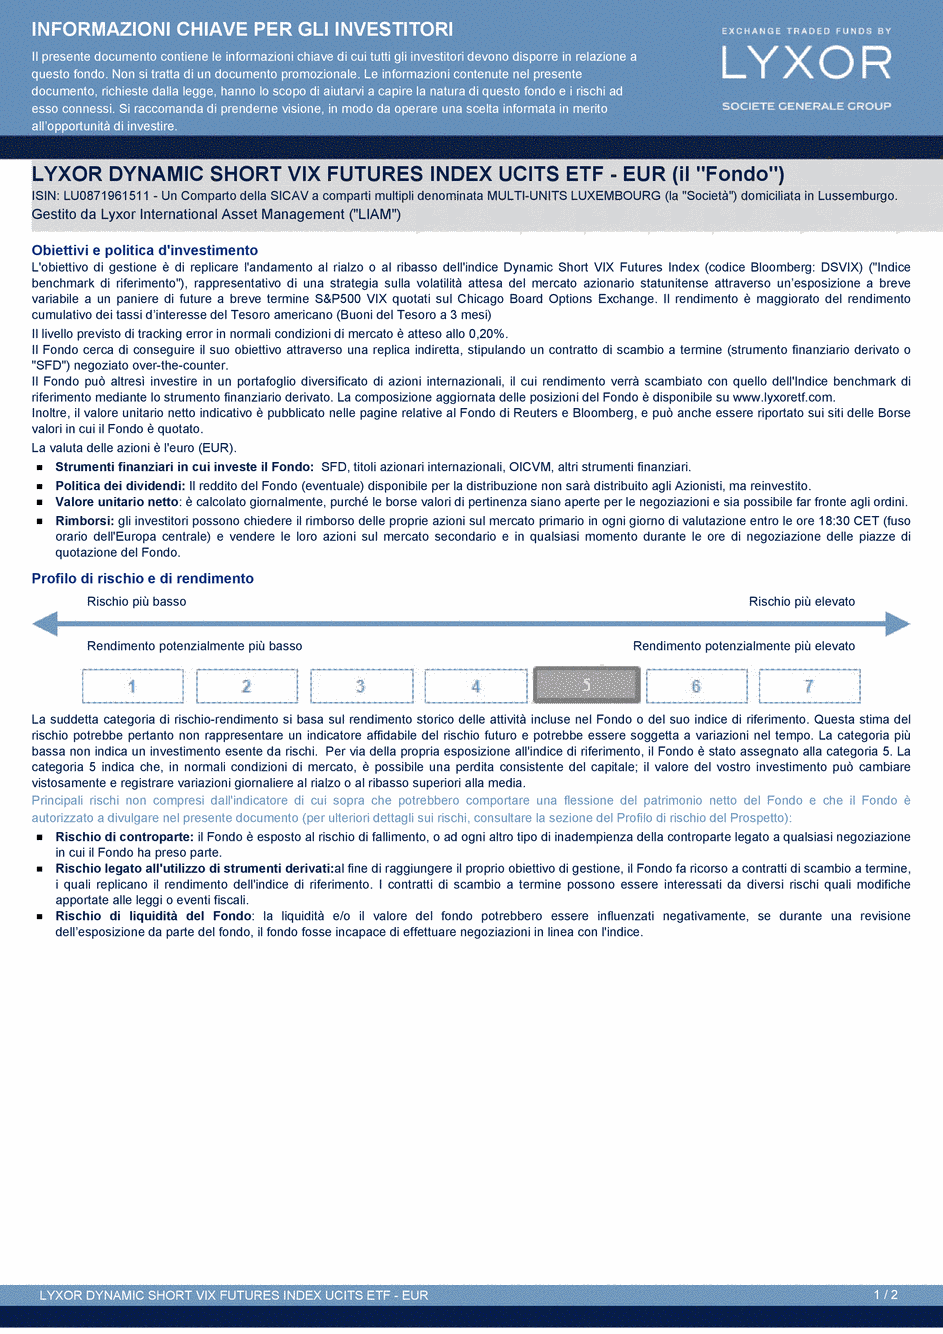 DICI Lyxor UCITS ETF DYNAMIC SHORT VIX - EUR - 01/04/2015 - Italien